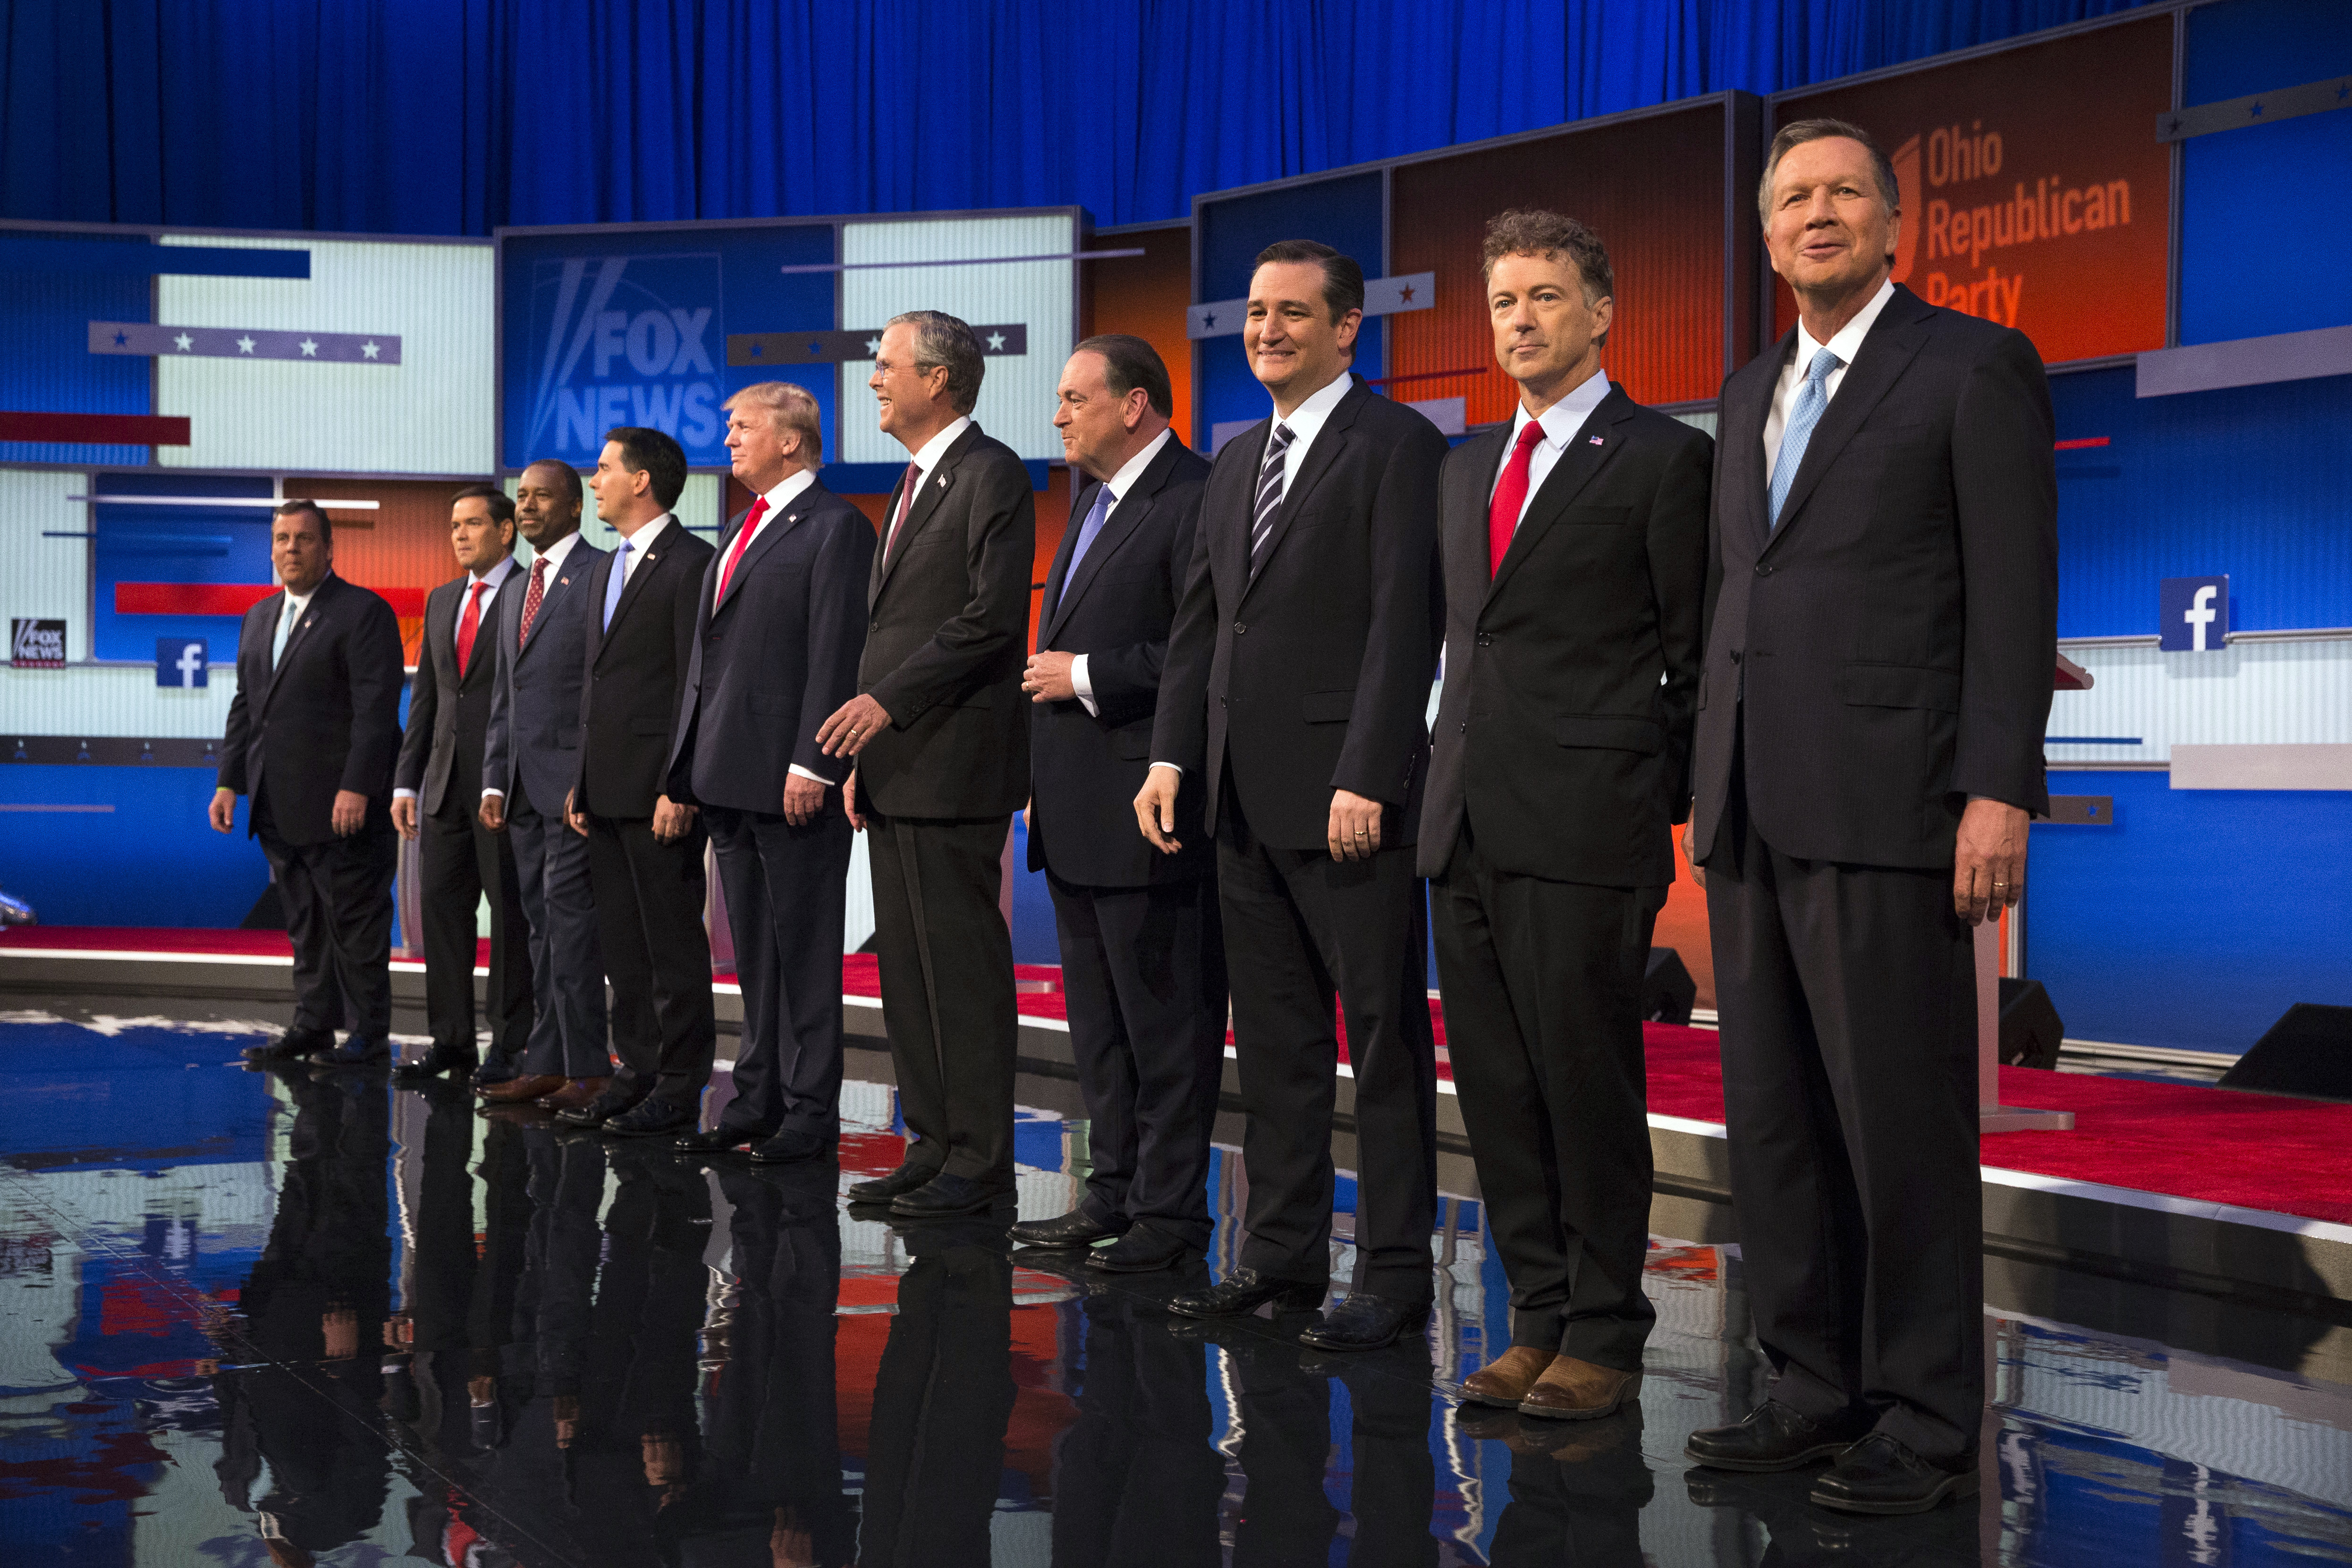 Gop Debate Highlights Analysis Of The First Republican Debate Cbs News